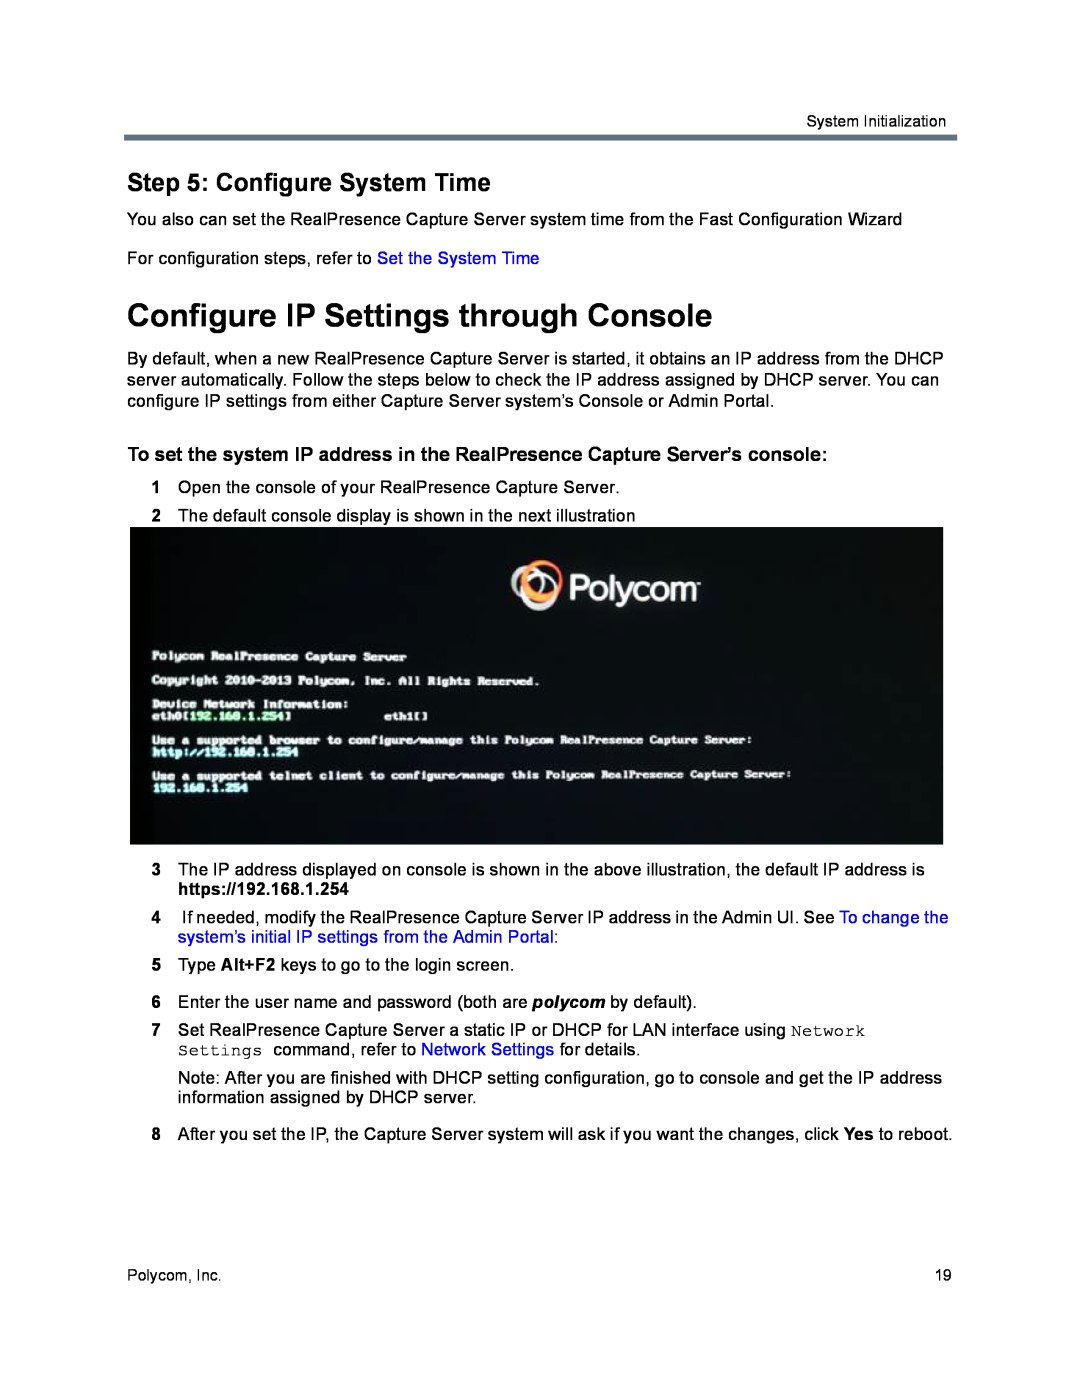 Polycom 40/0 manual Configure IP Settings through Console, Configure System Time 